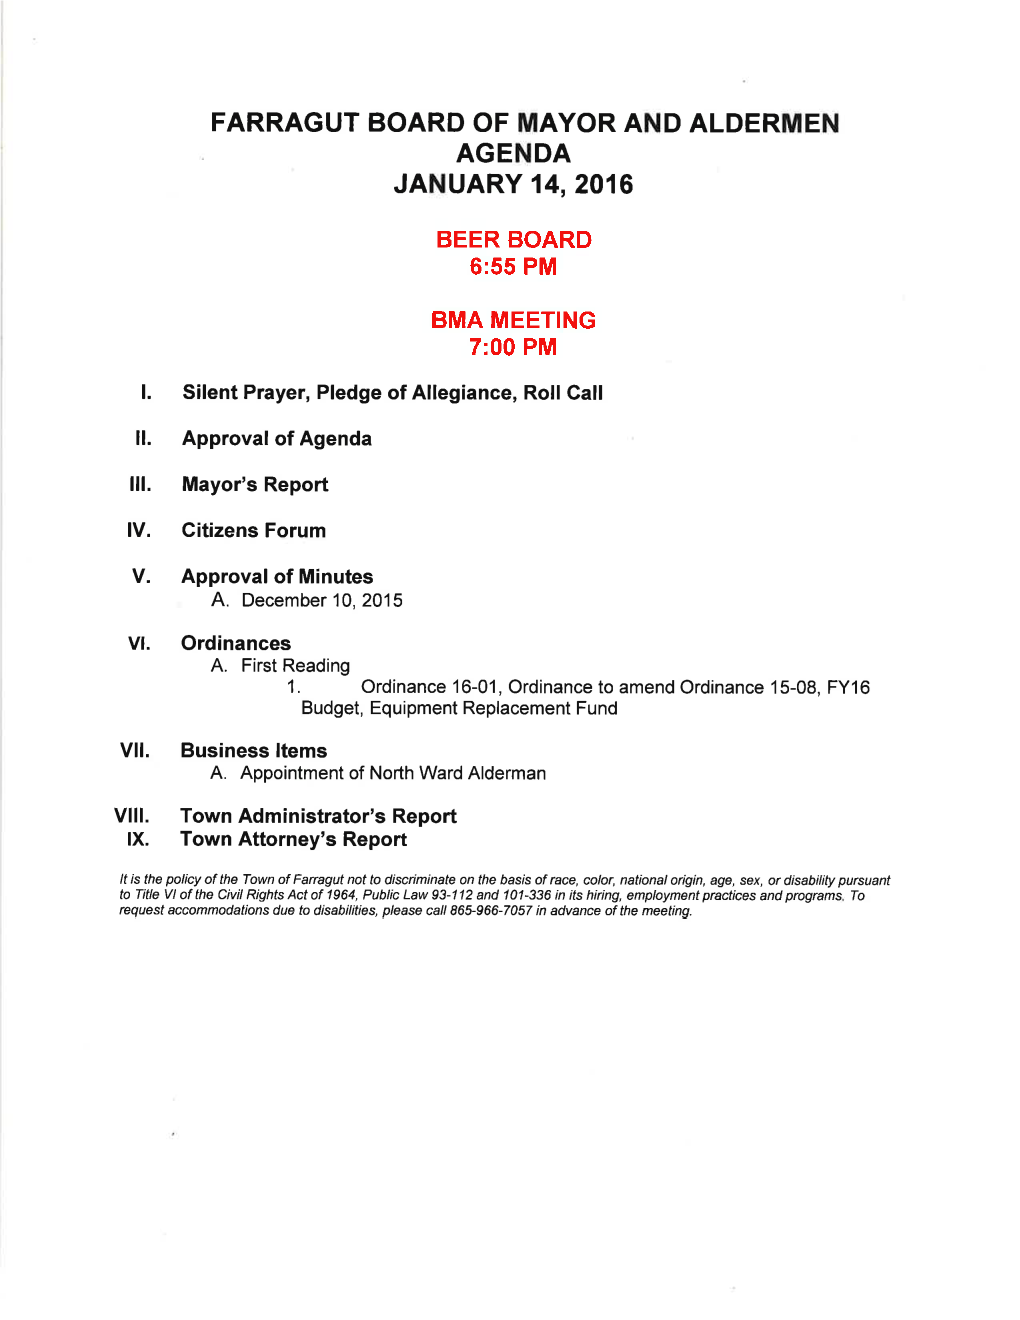 Farragut Board of Mayor and Aldermen Agenda January 14,2016